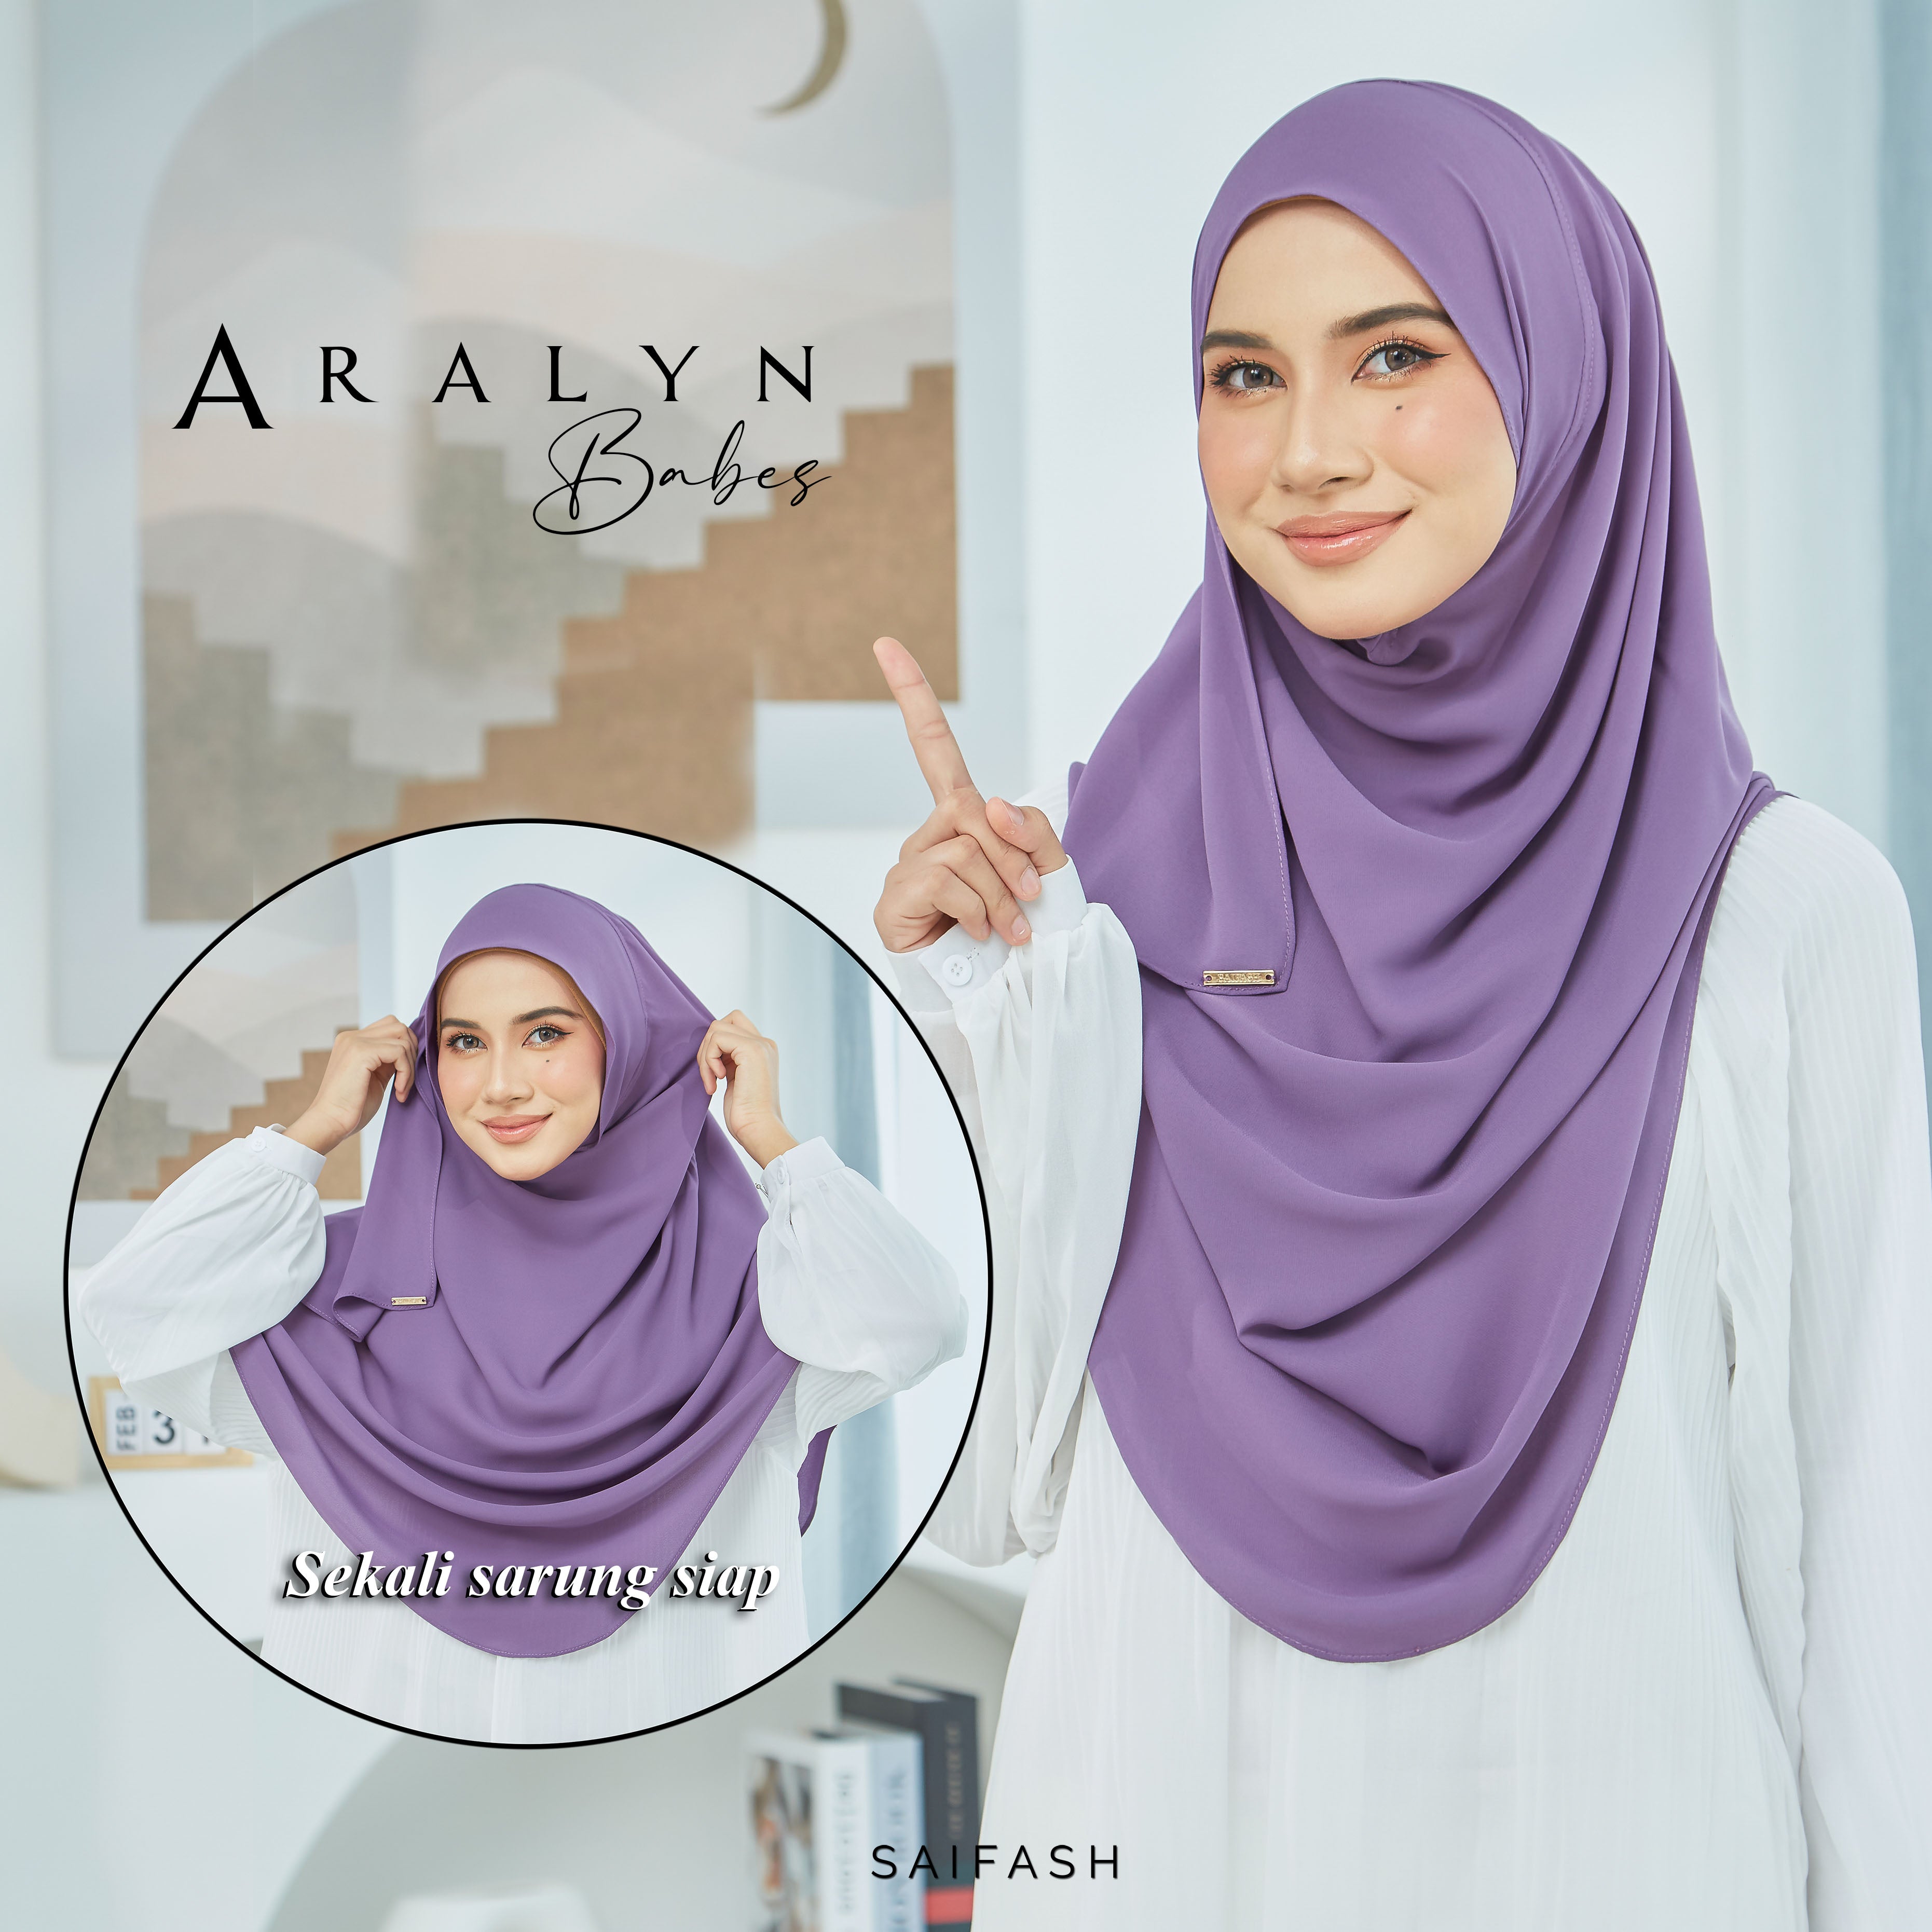 Aralyn Babes Instant Hijab in Hazelnut